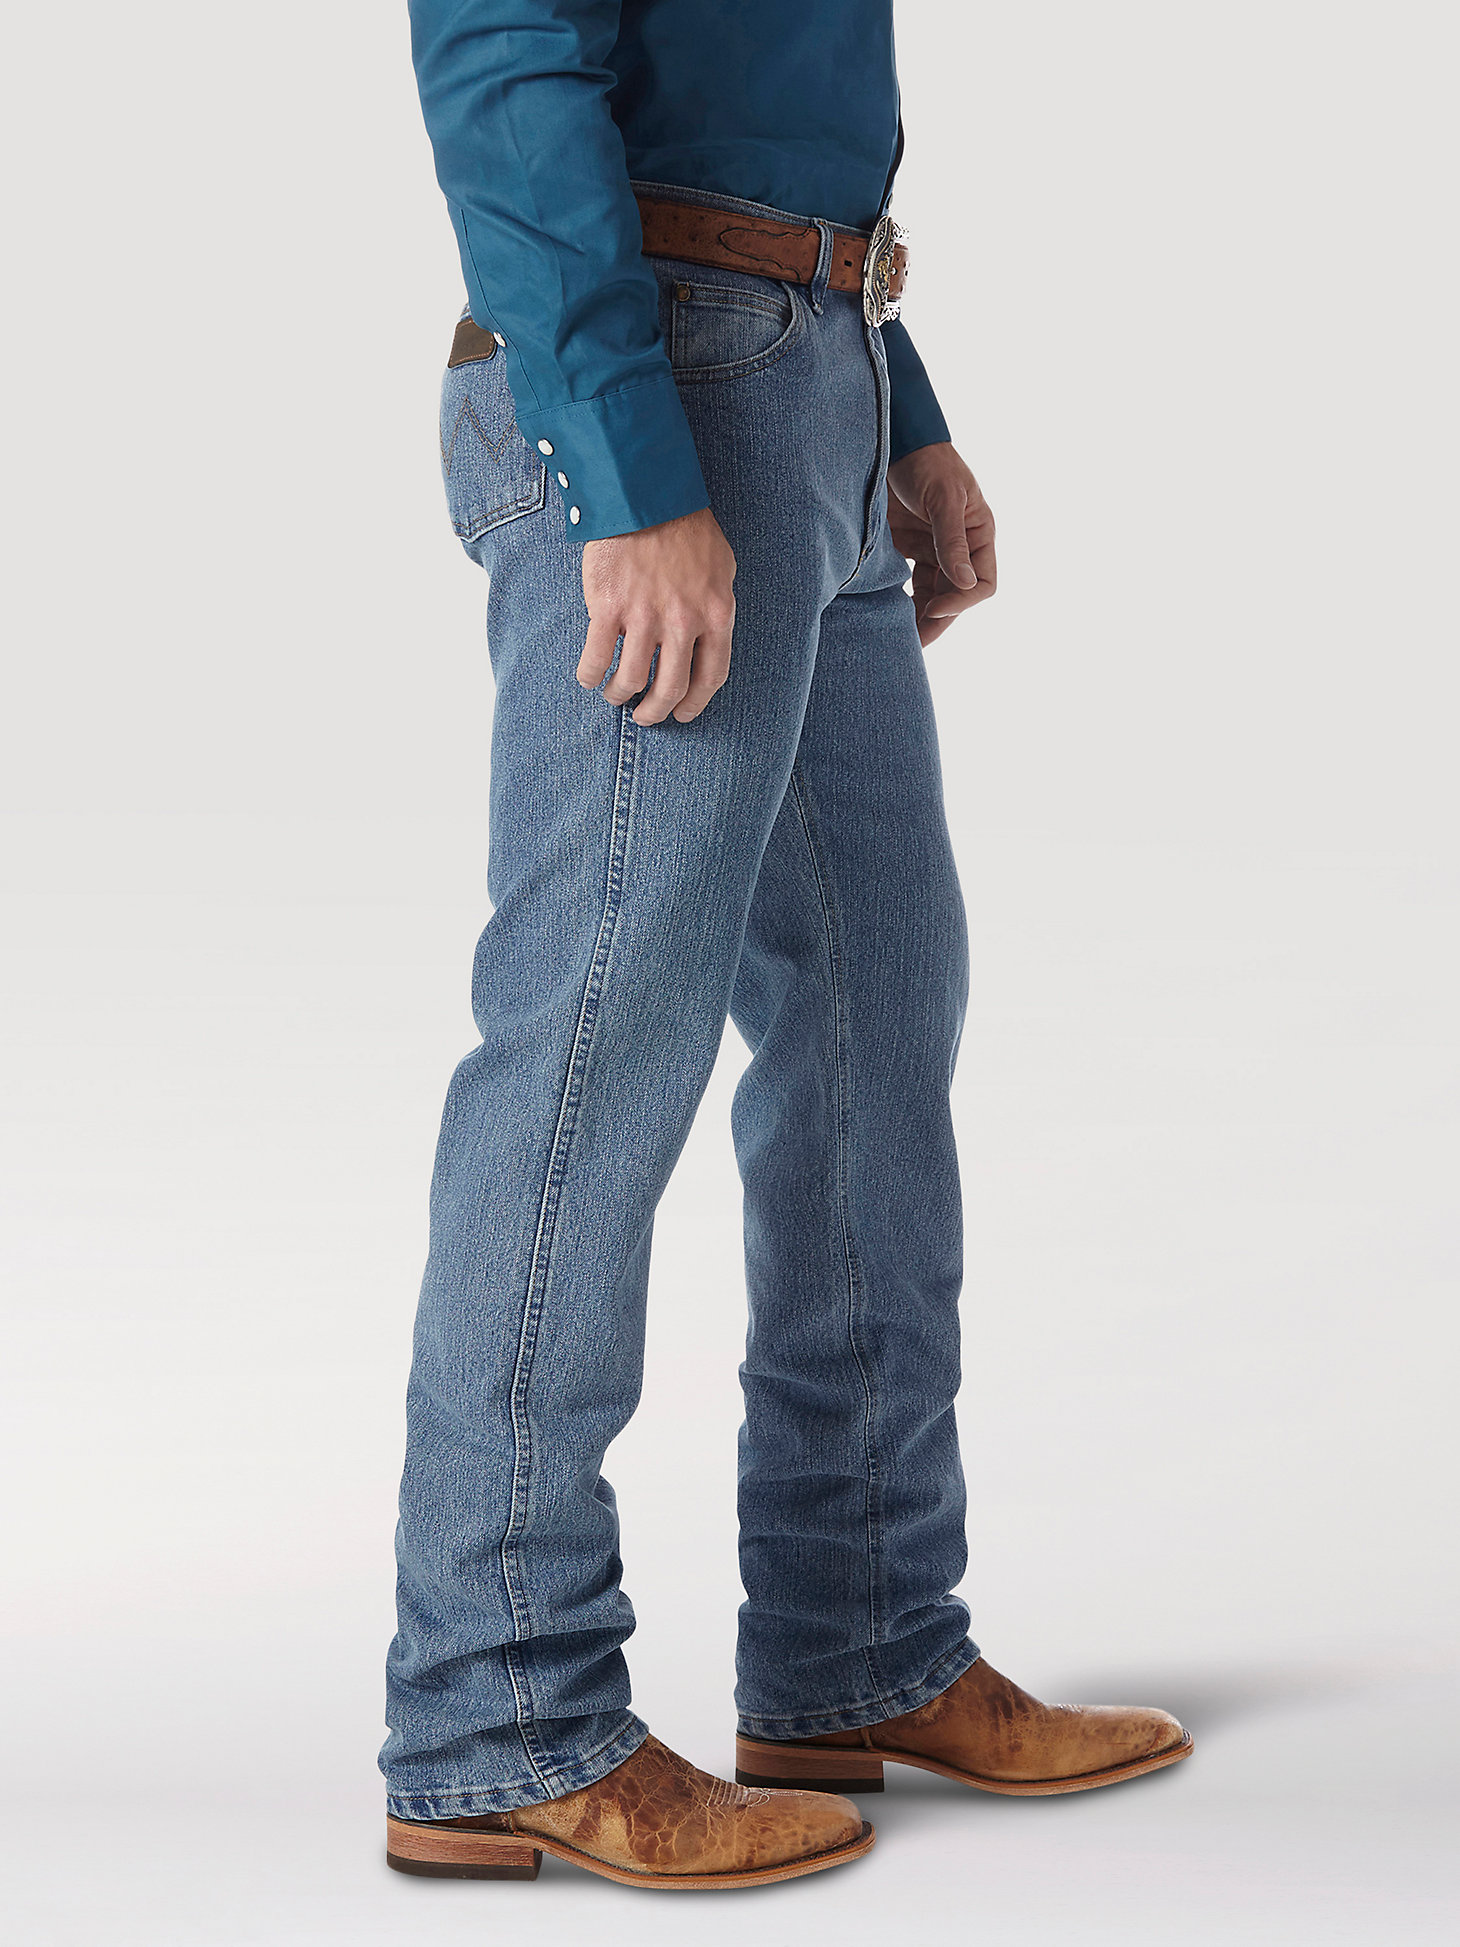 Premium Performance Advanced Comfort Cowboy Cut® Regular Fit Jean in Stone Bleach alternative view 1